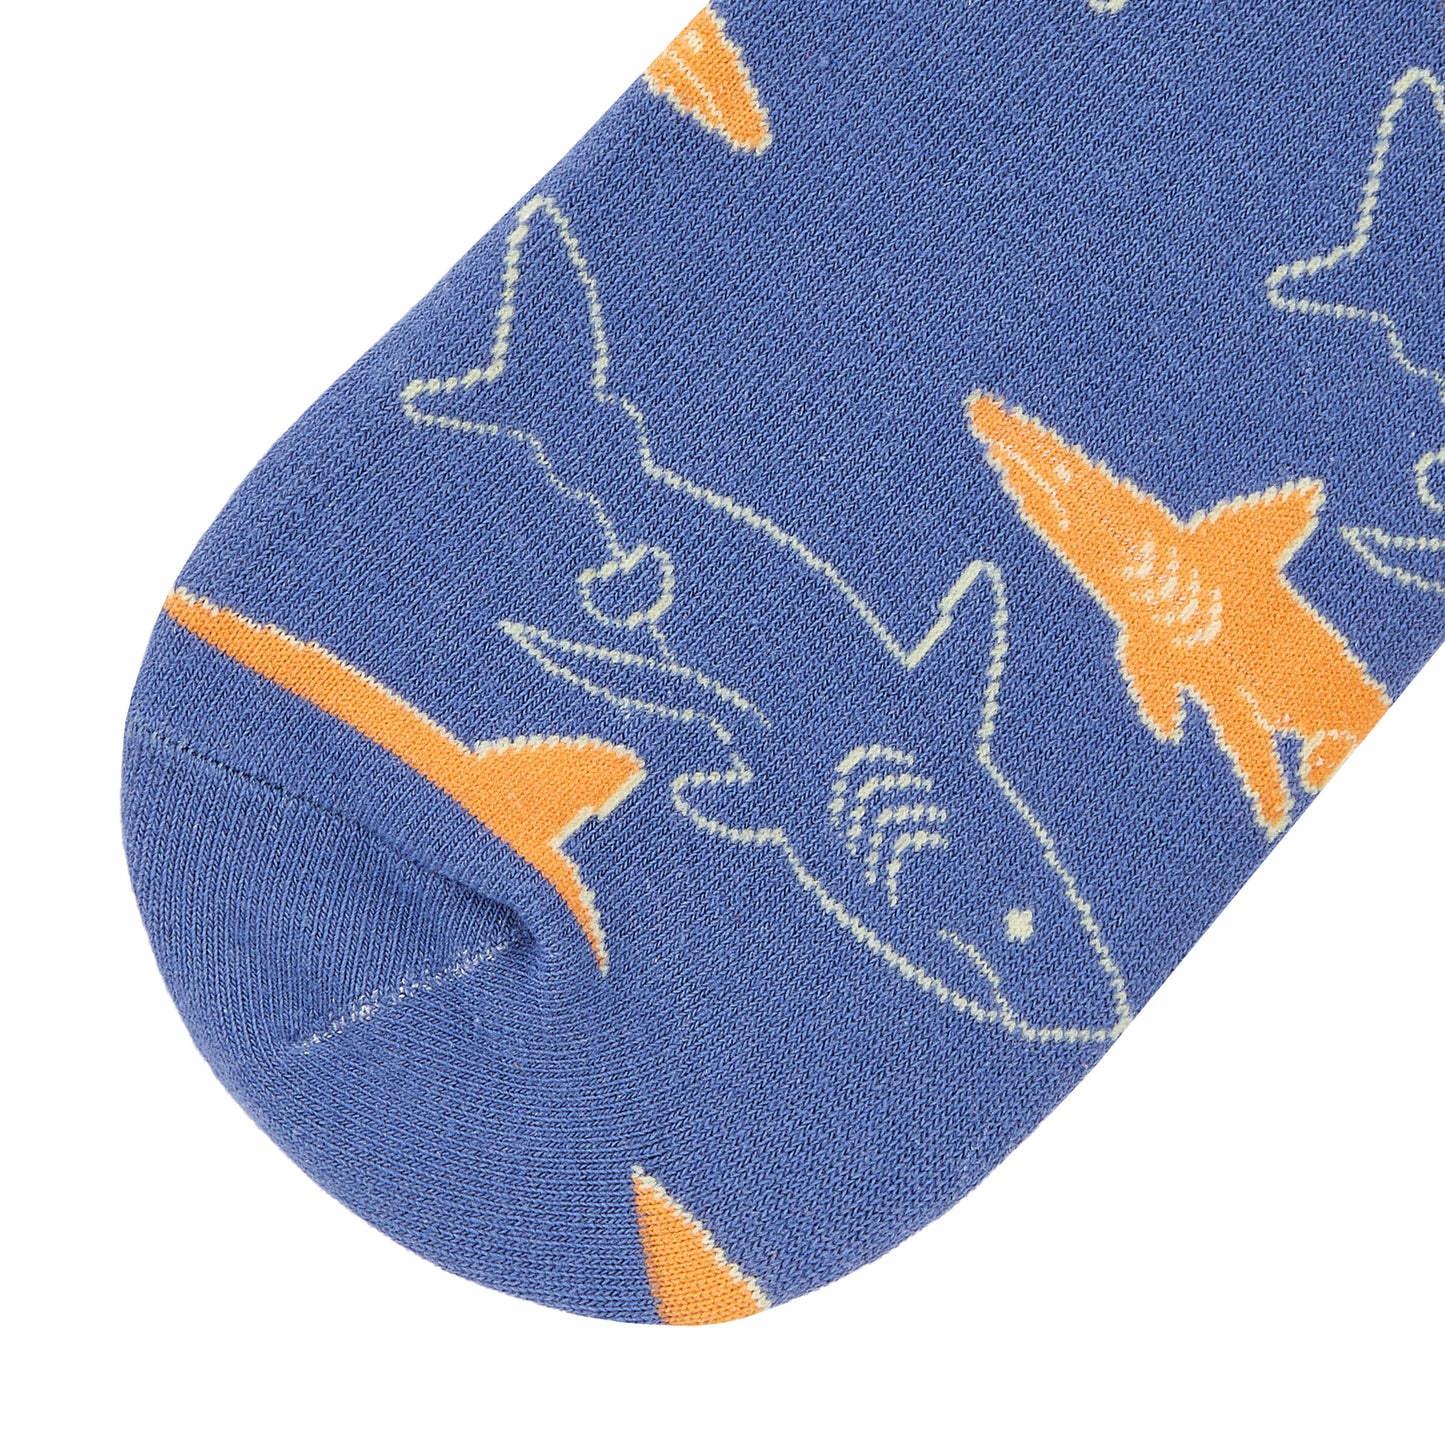 Shark Printed Crew Length Socks - IDENTITY Apparel Shop